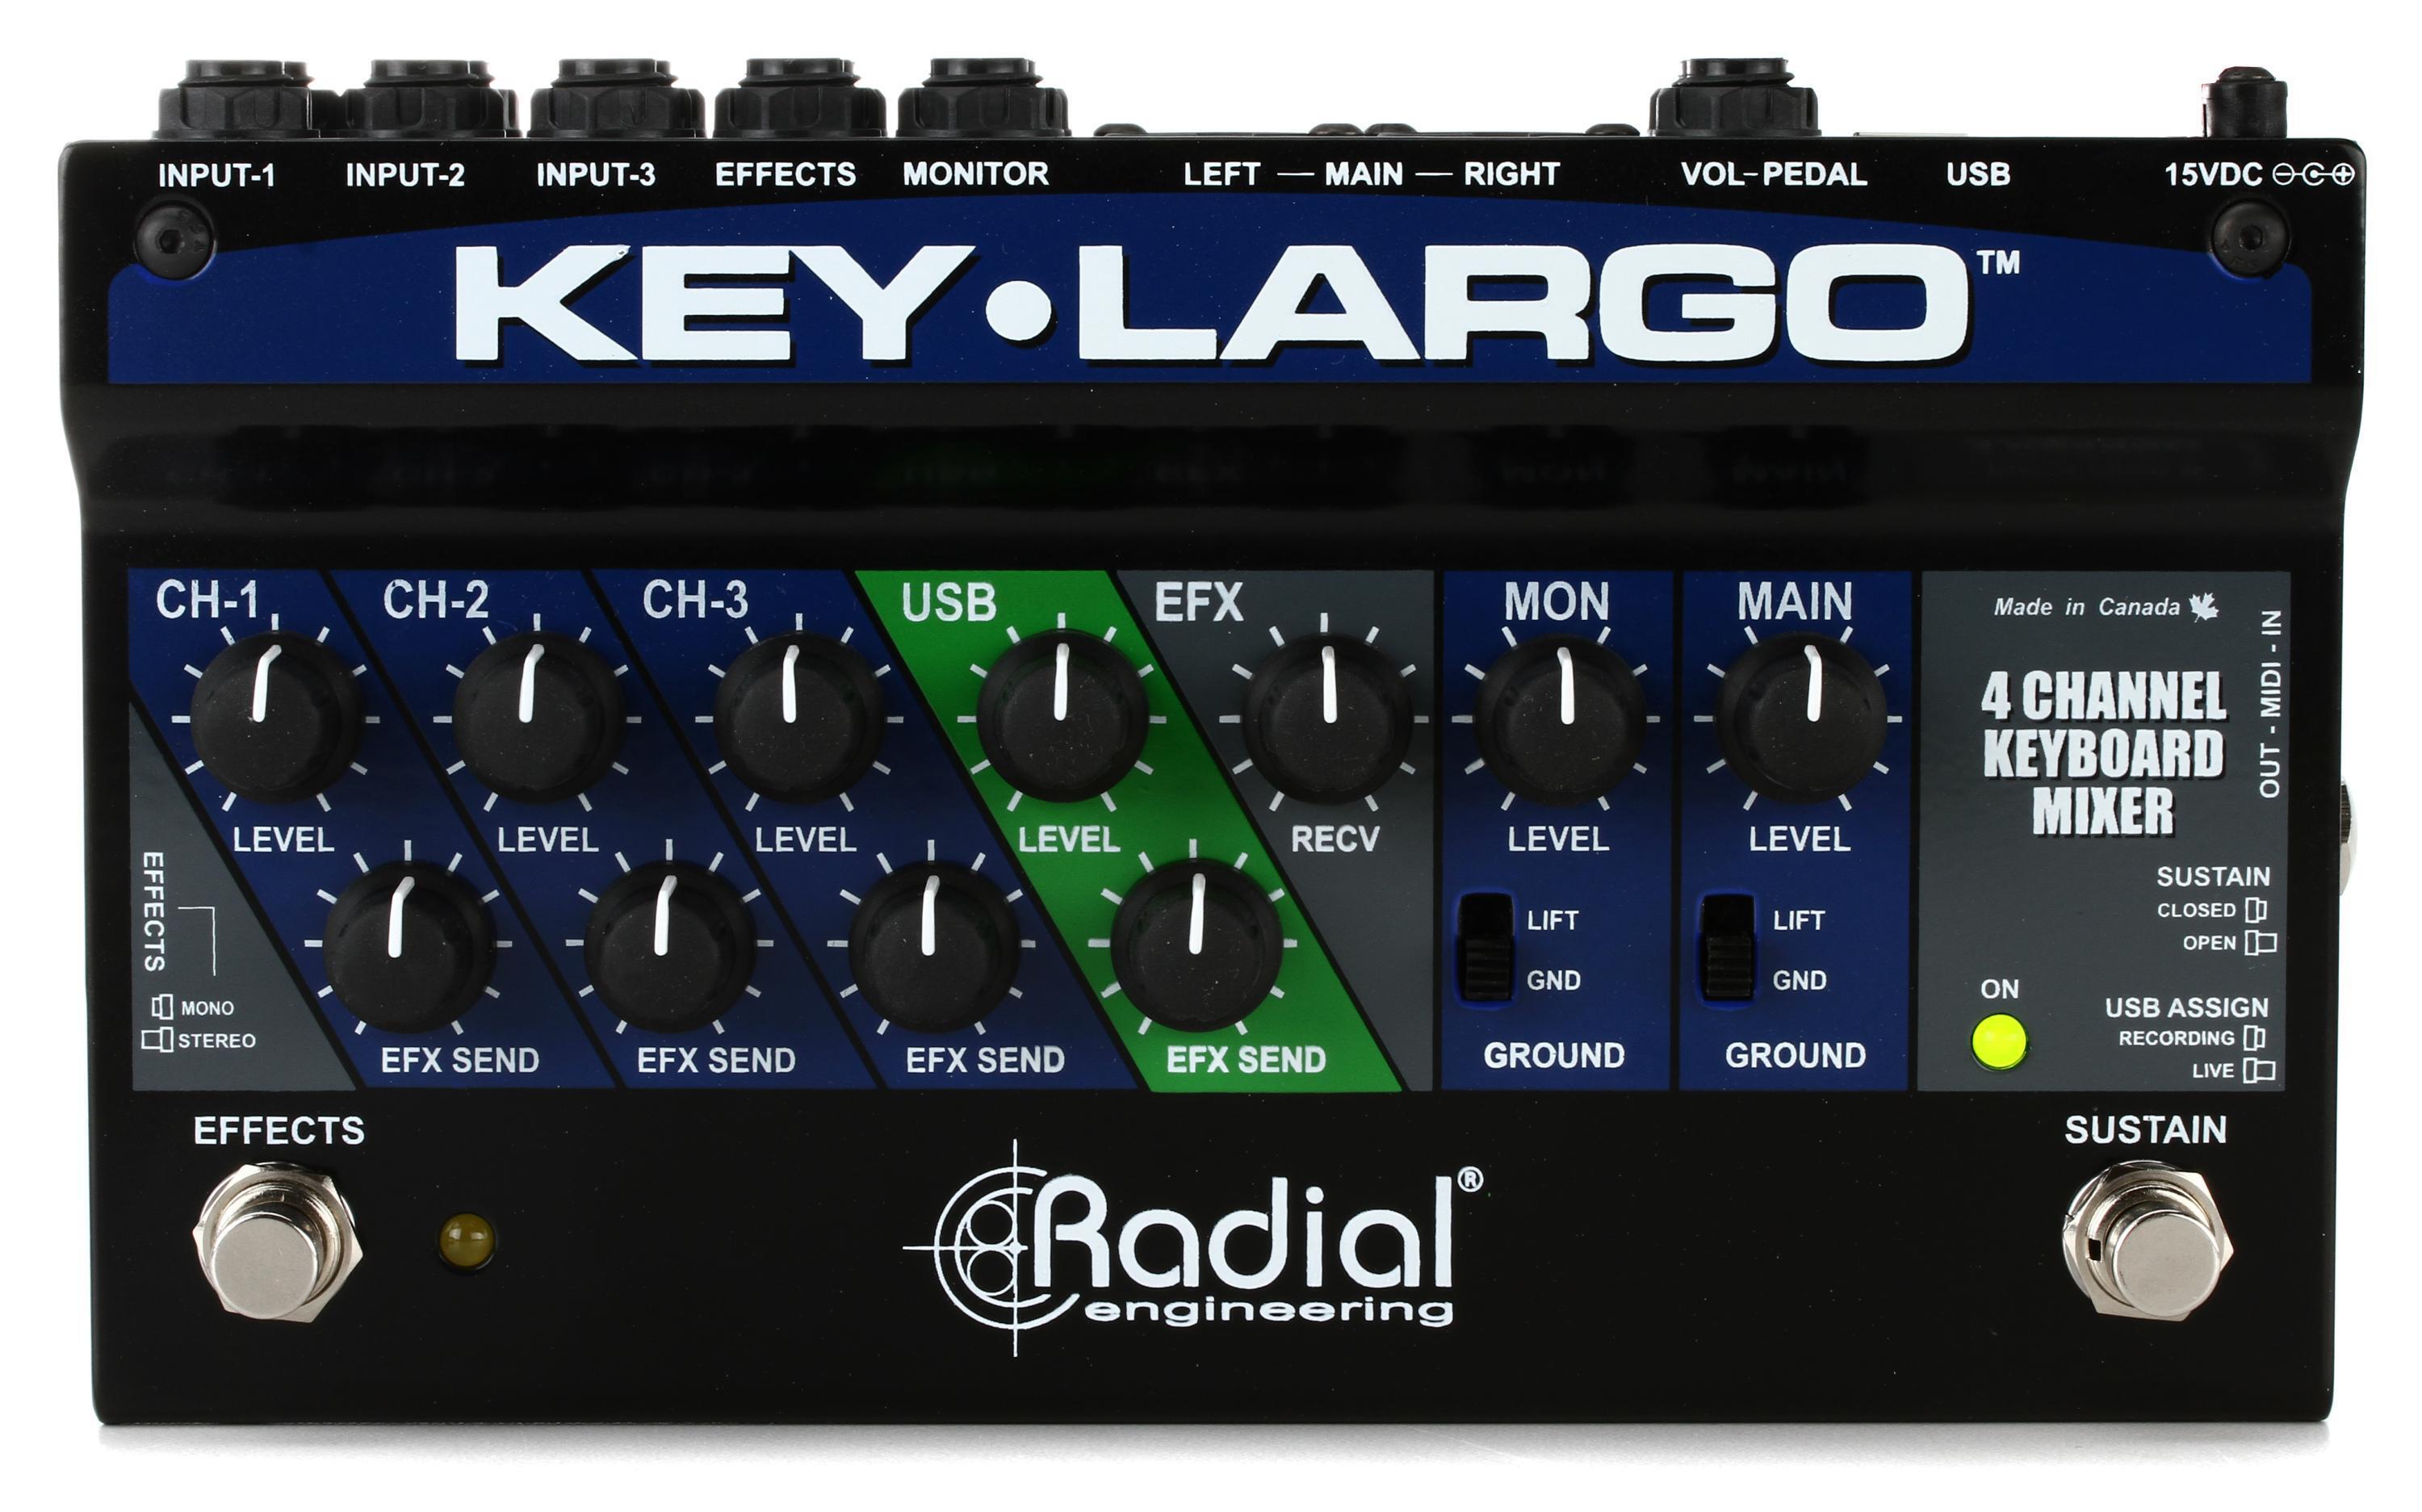 Bundled Item: Radial Key-Largo Keyboard Mixer with Balanced DI Outs